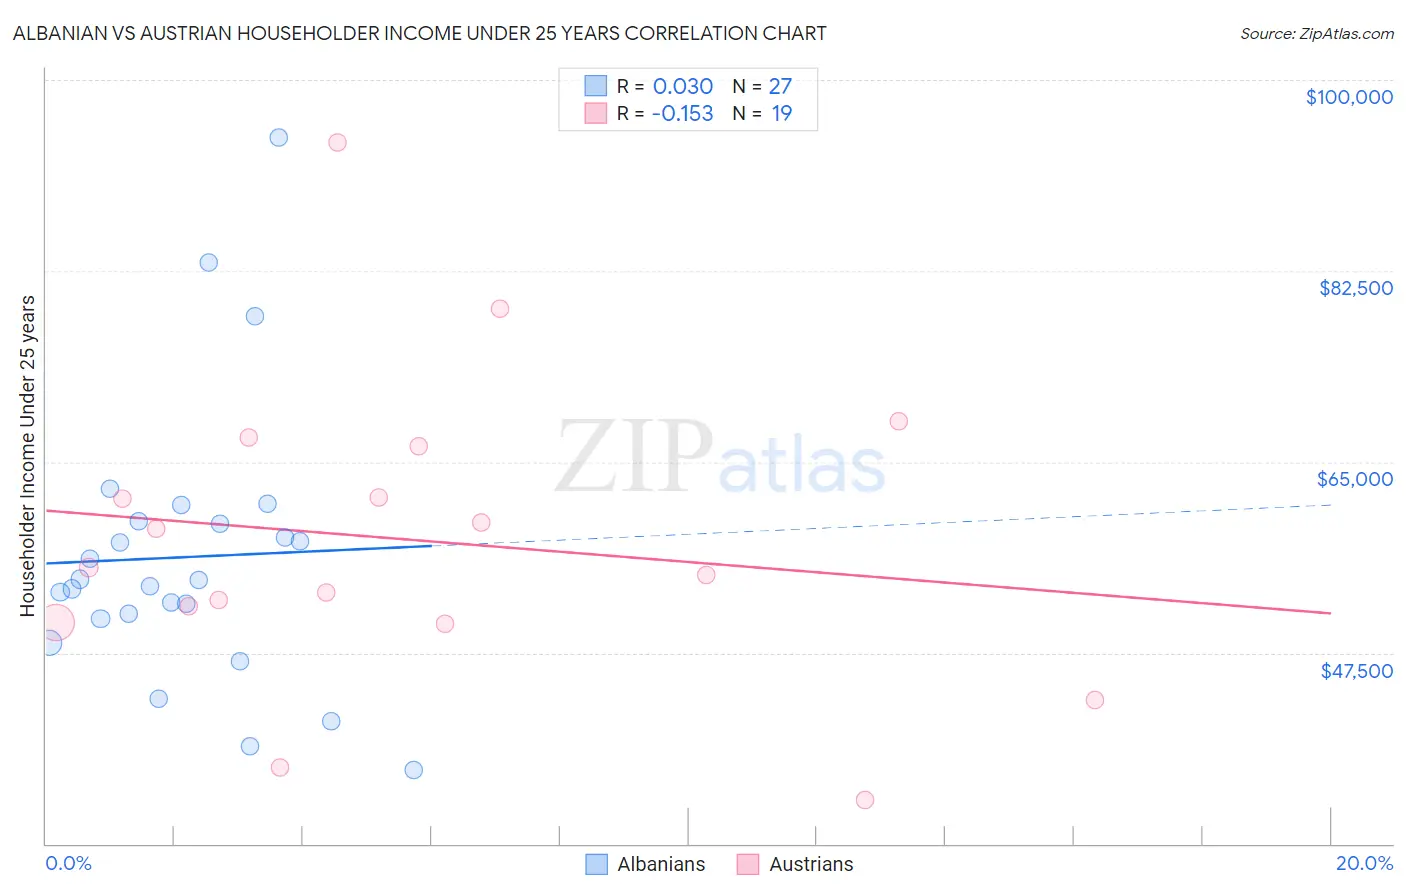 Albanian vs Austrian Householder Income Under 25 years